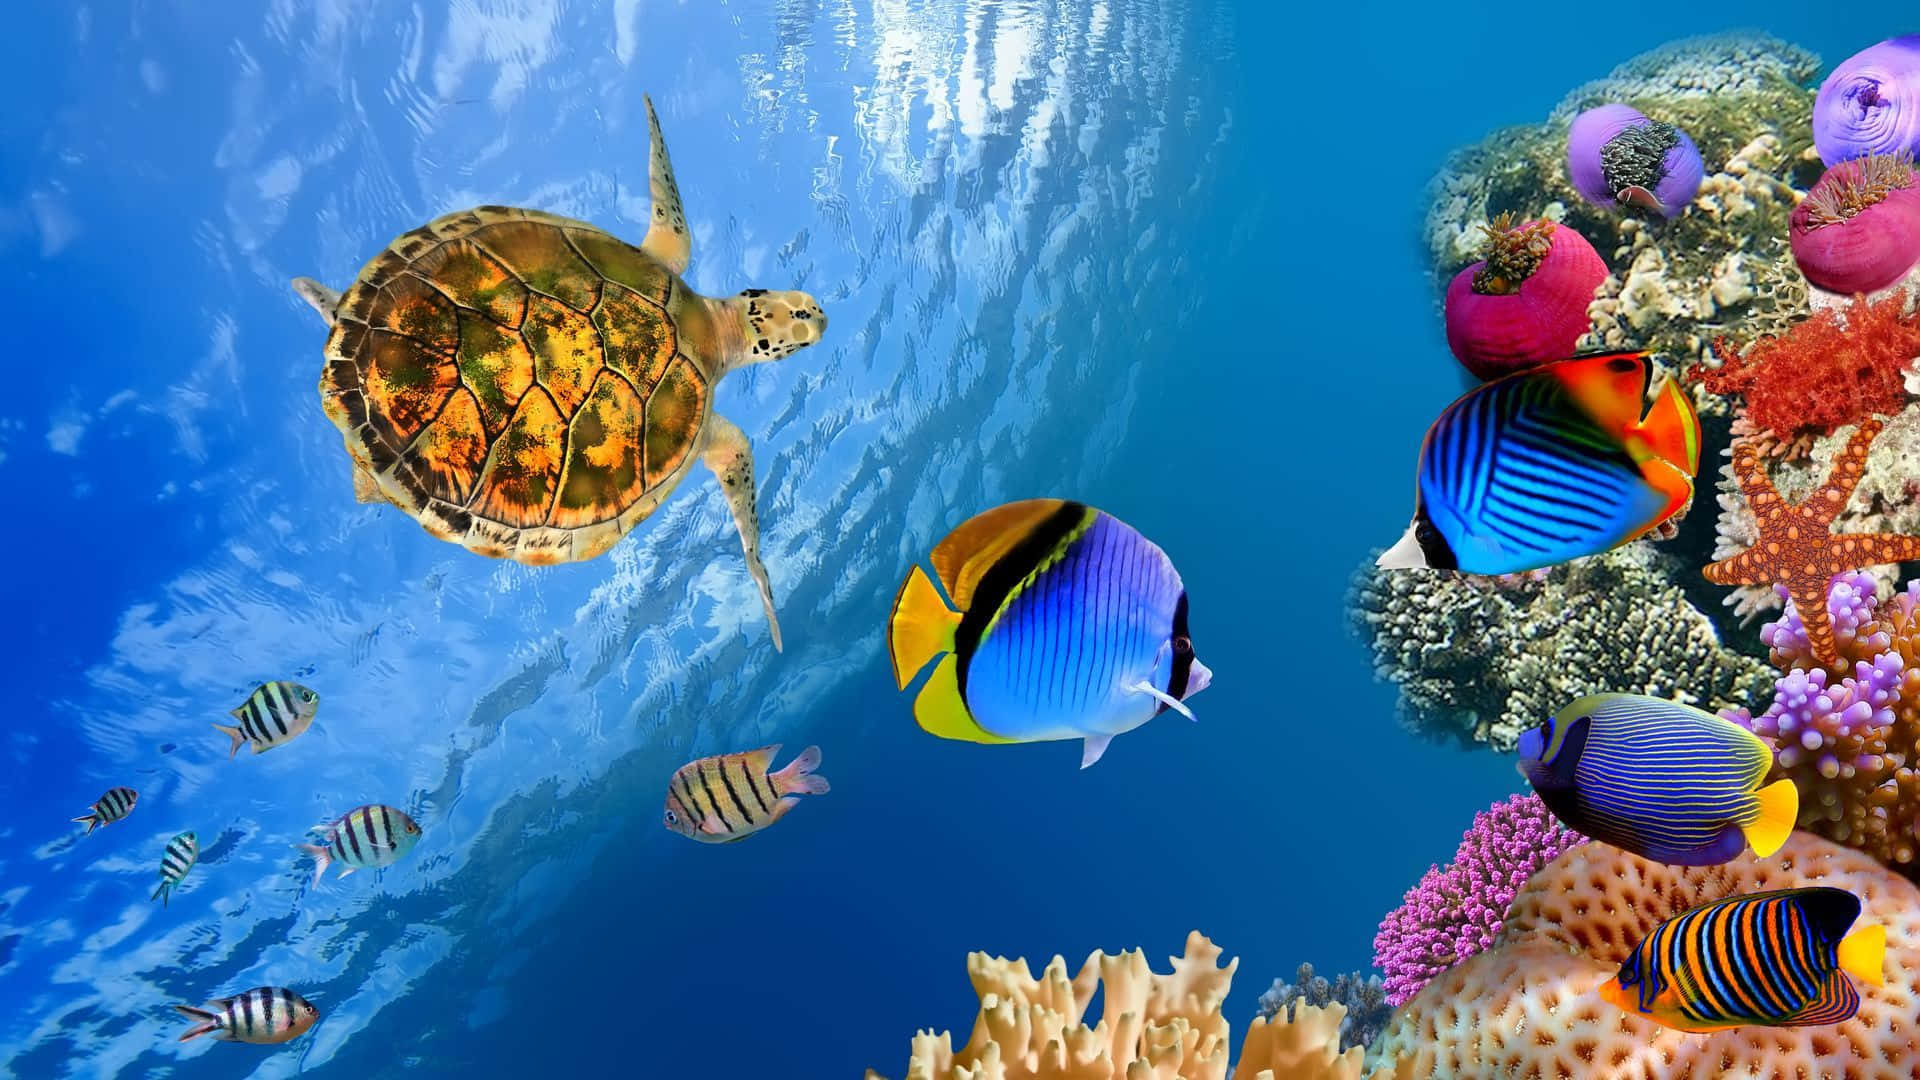 Vibrant Underwater Coral Reef Landscape